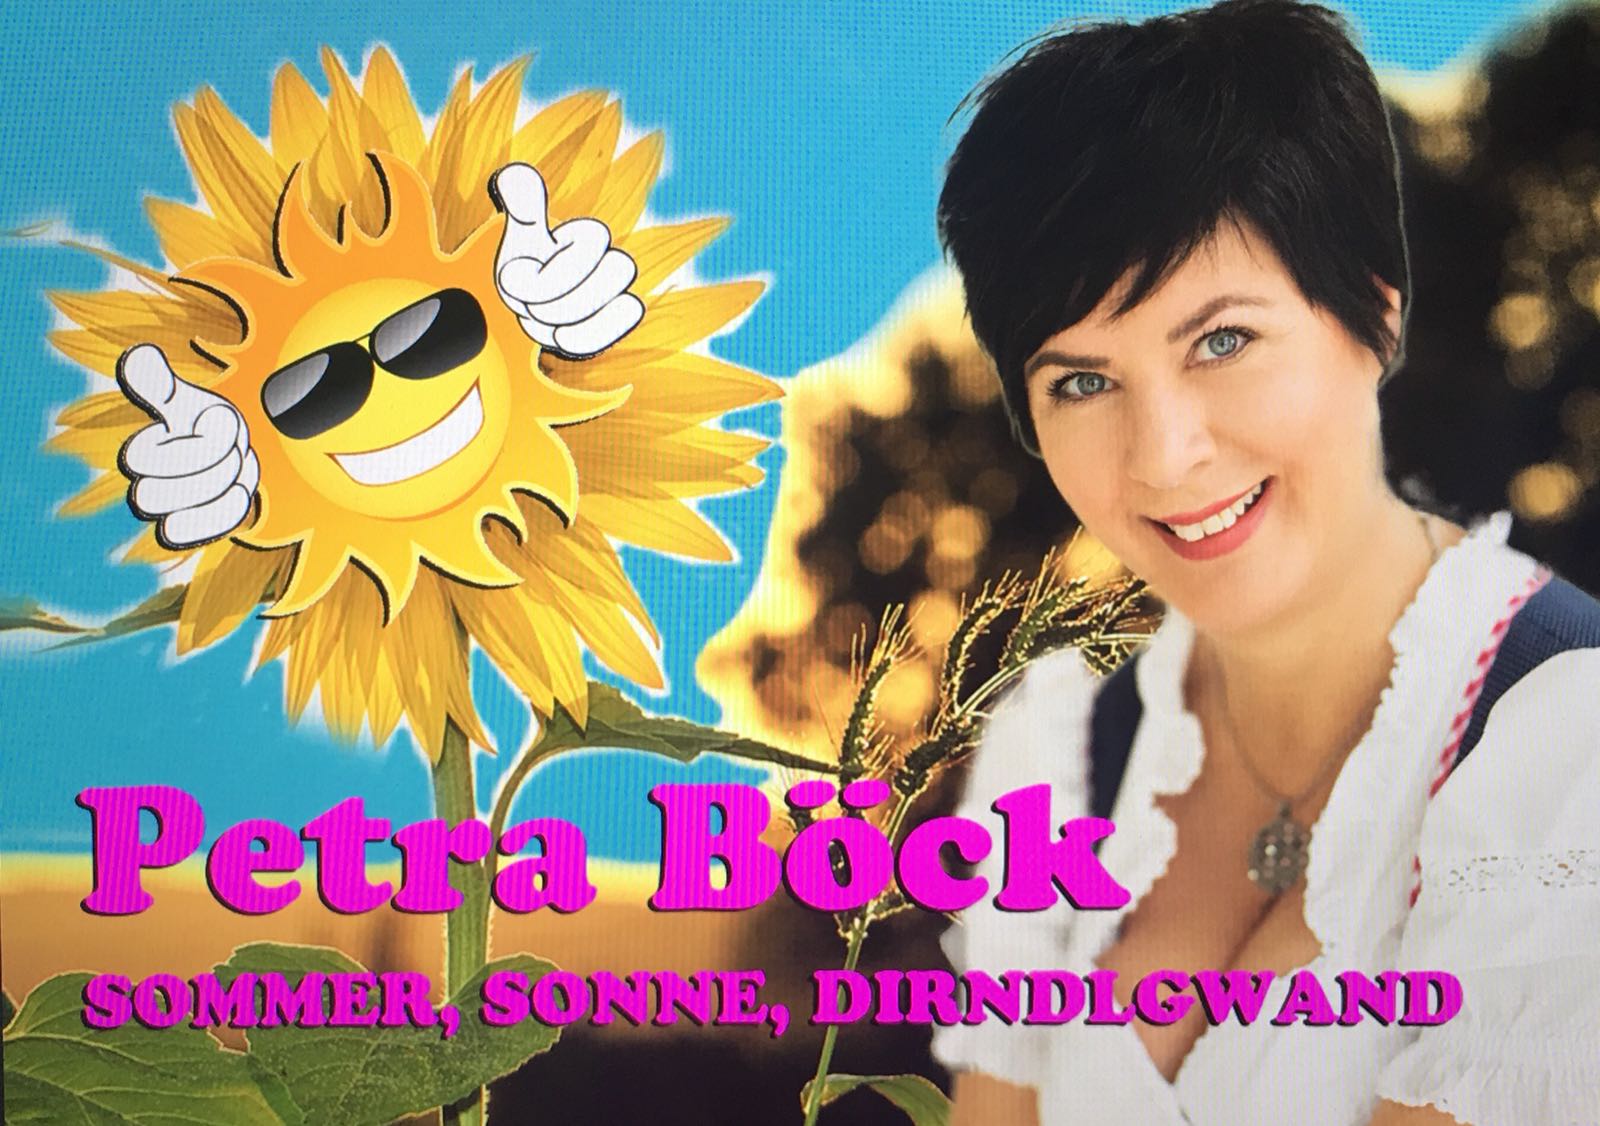 Petra bck - Sommer Sonne Dirndlgwand Cover.jpg